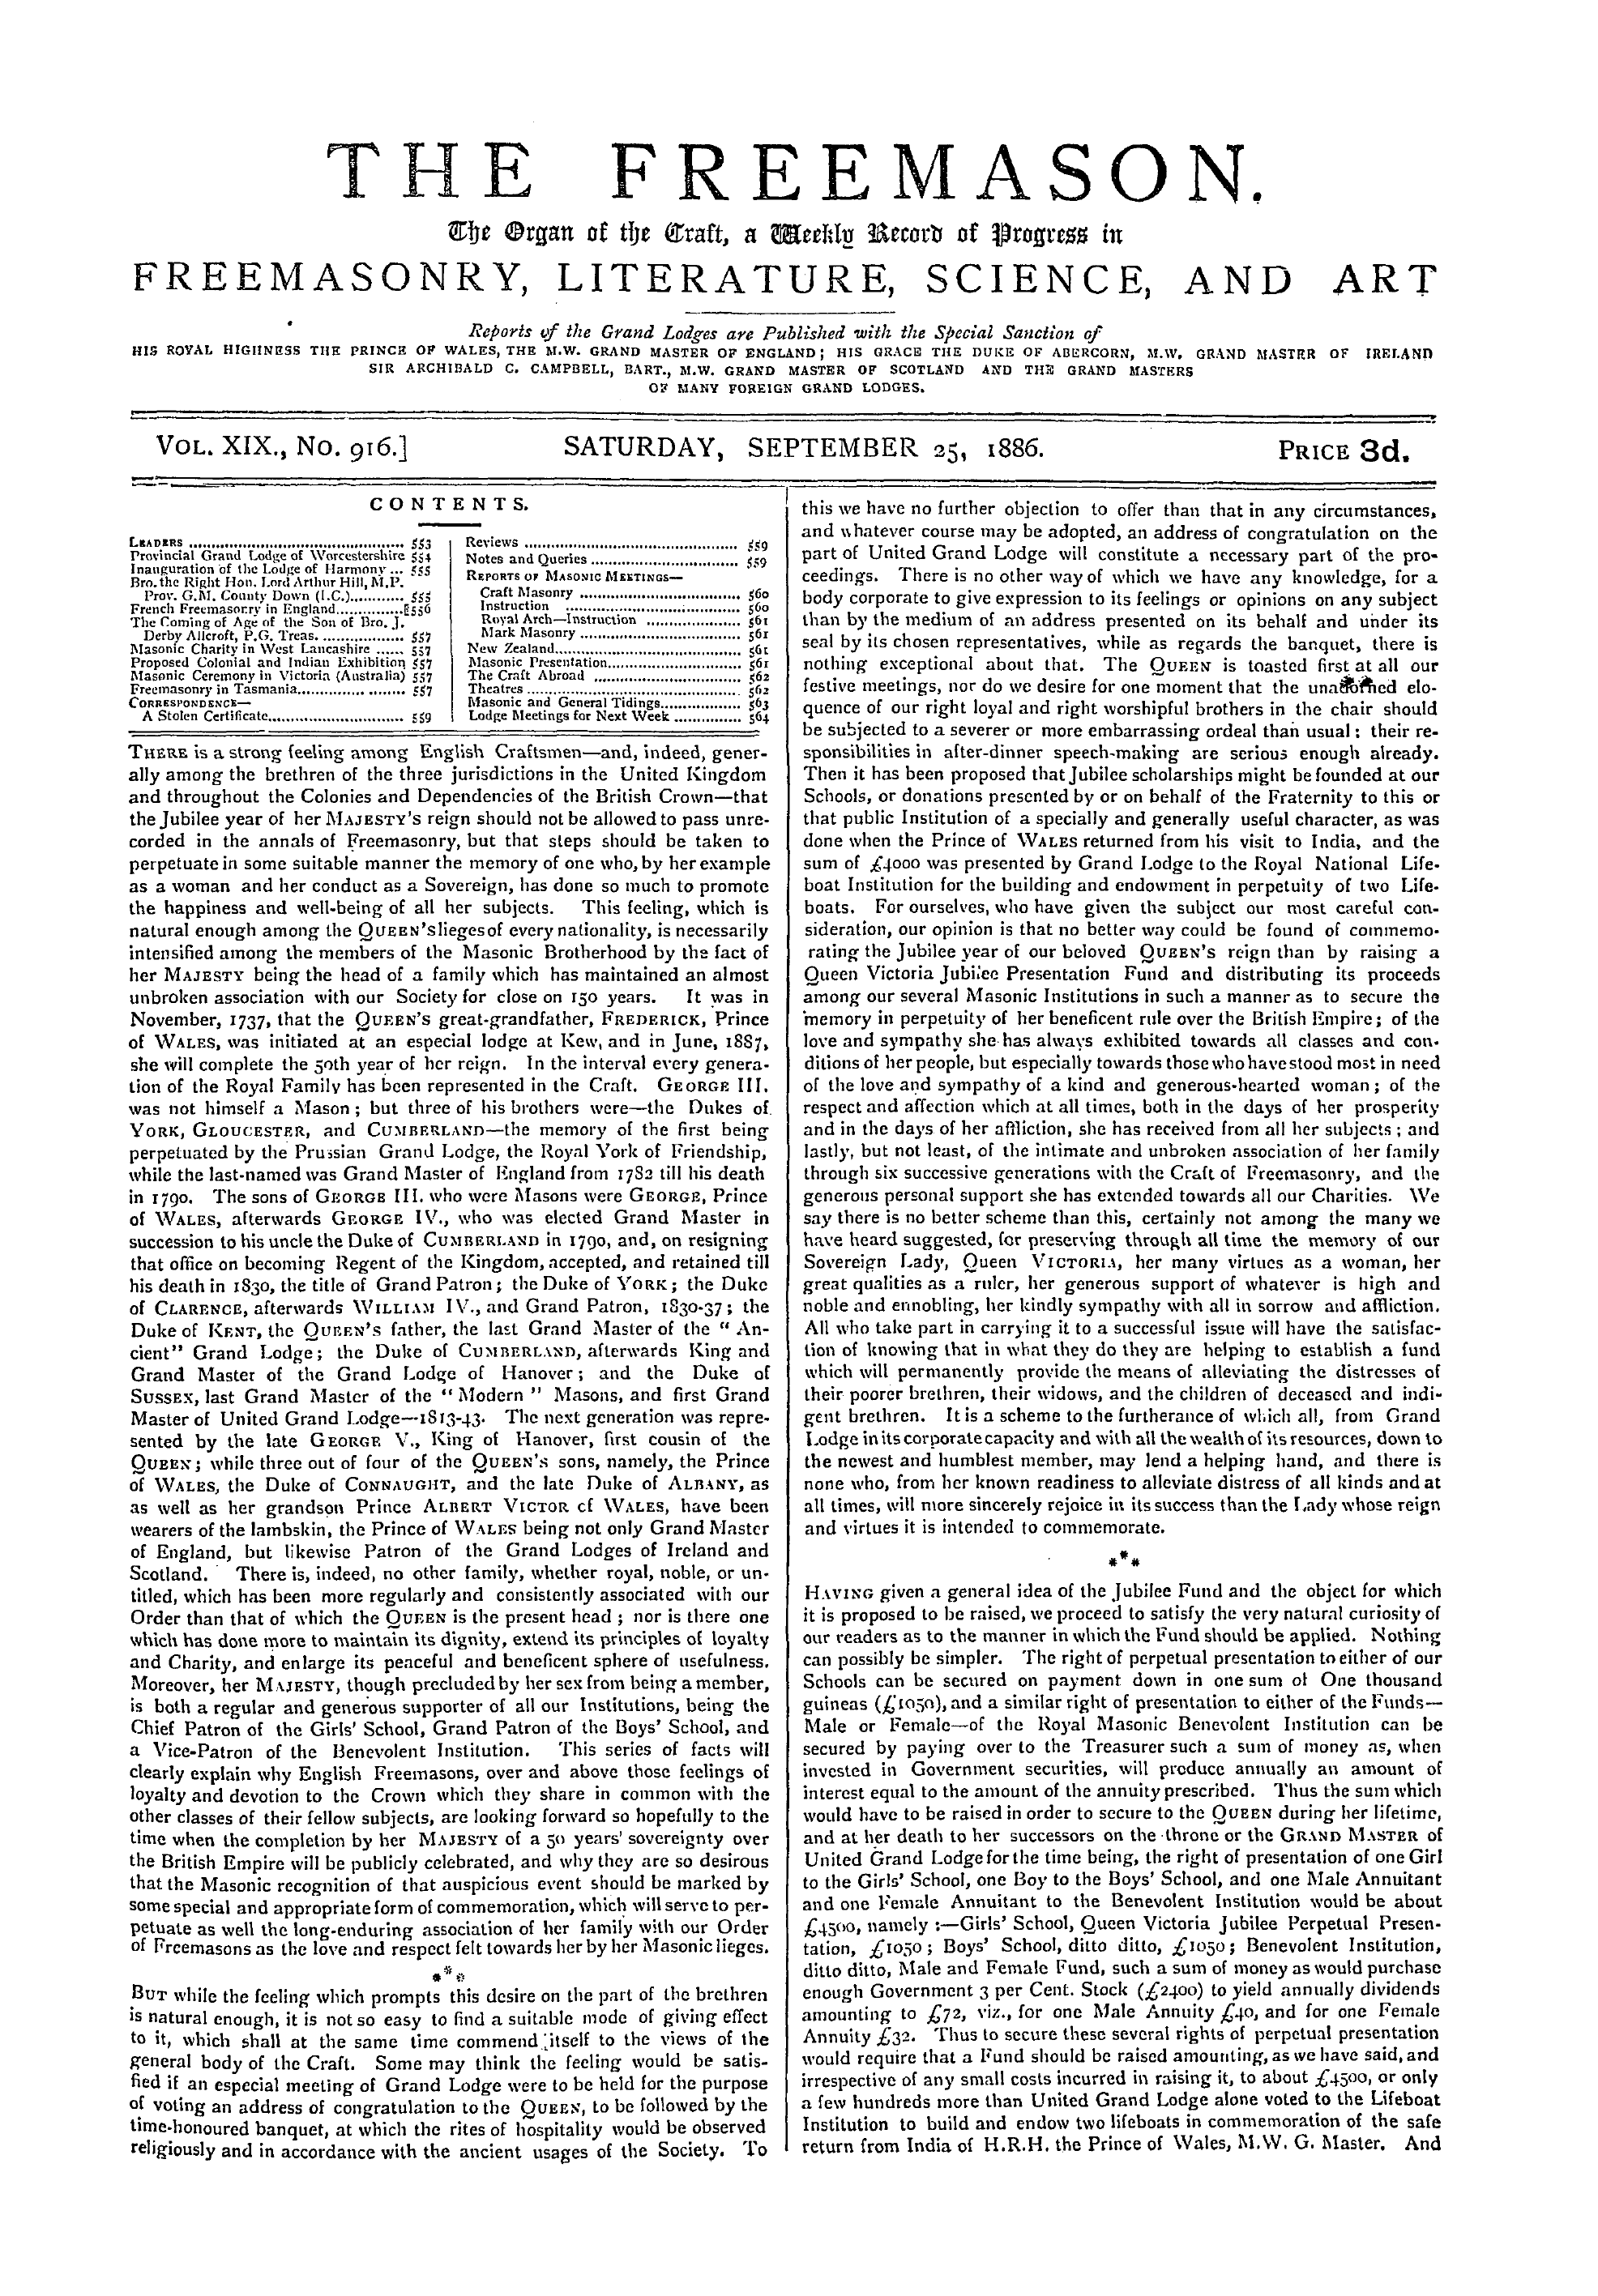 The Freemason: 1886-09-25 - Contents.